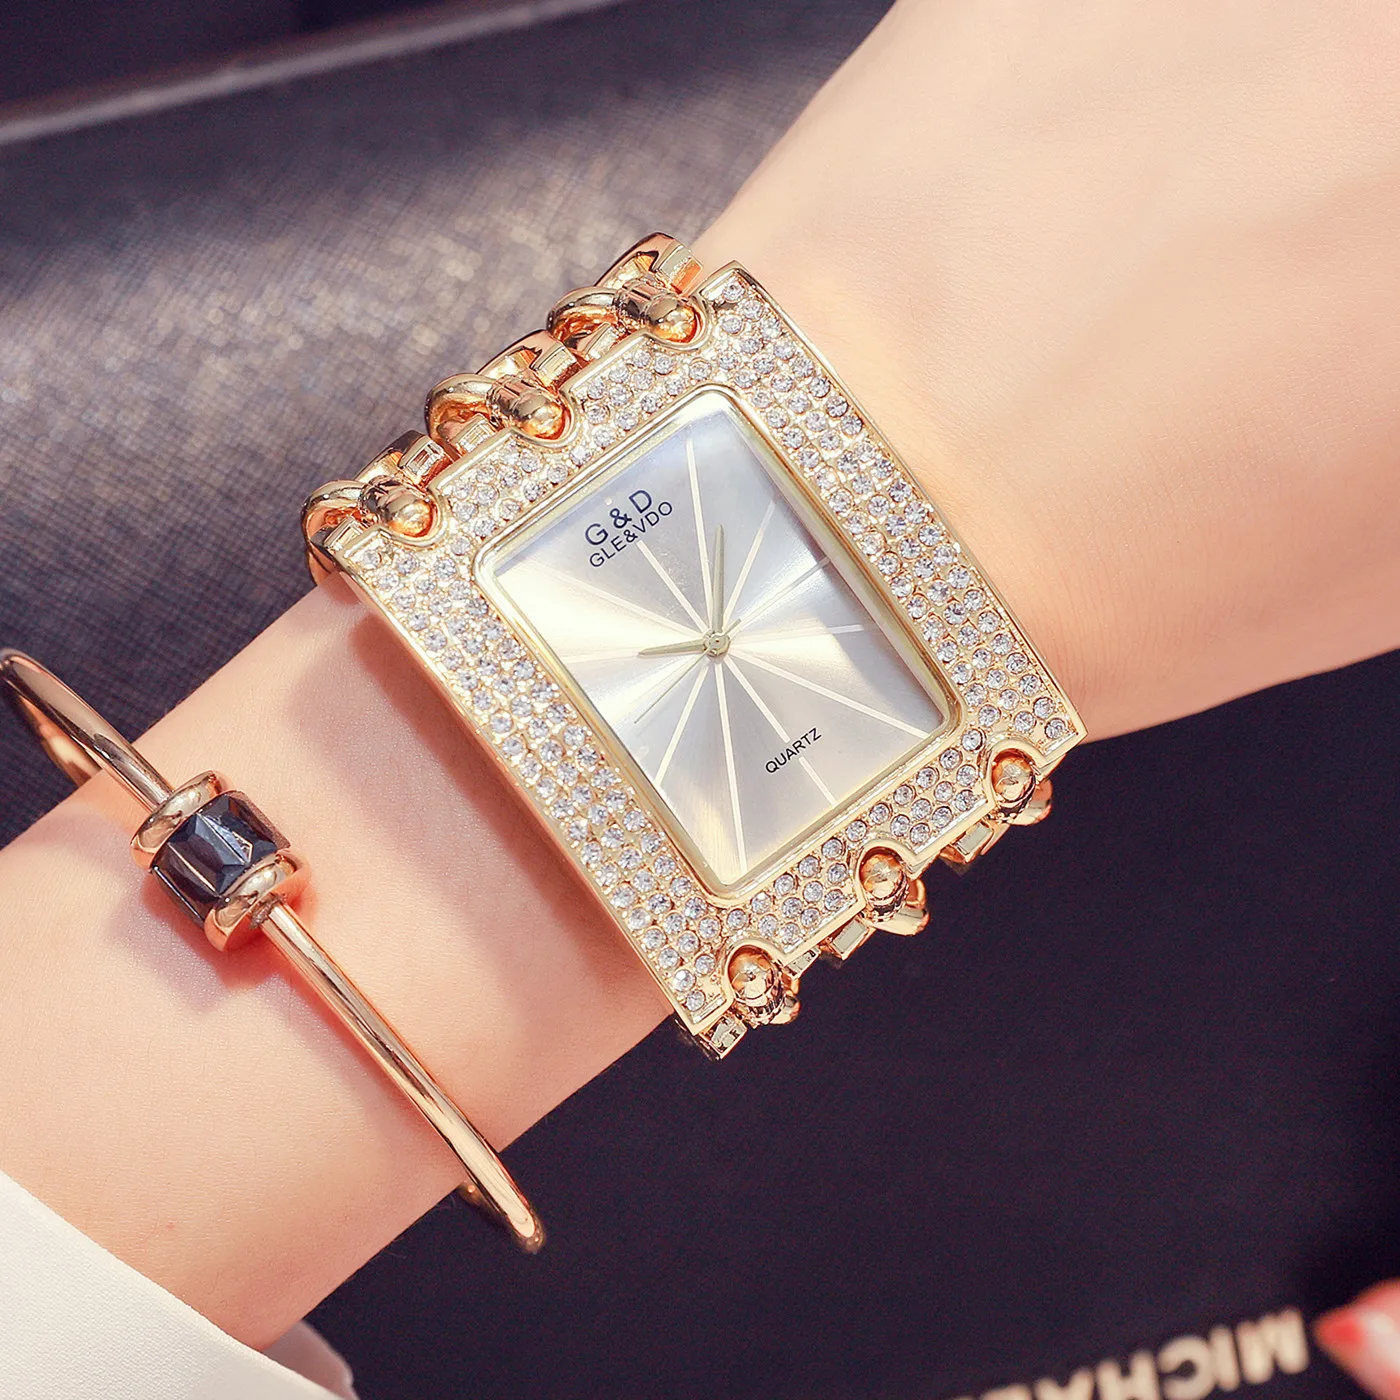 G&D 2021 New Casual Fashion Men's Bracelet Watch Three Chain Diamond Quartz Watch Free Shipping enlarge